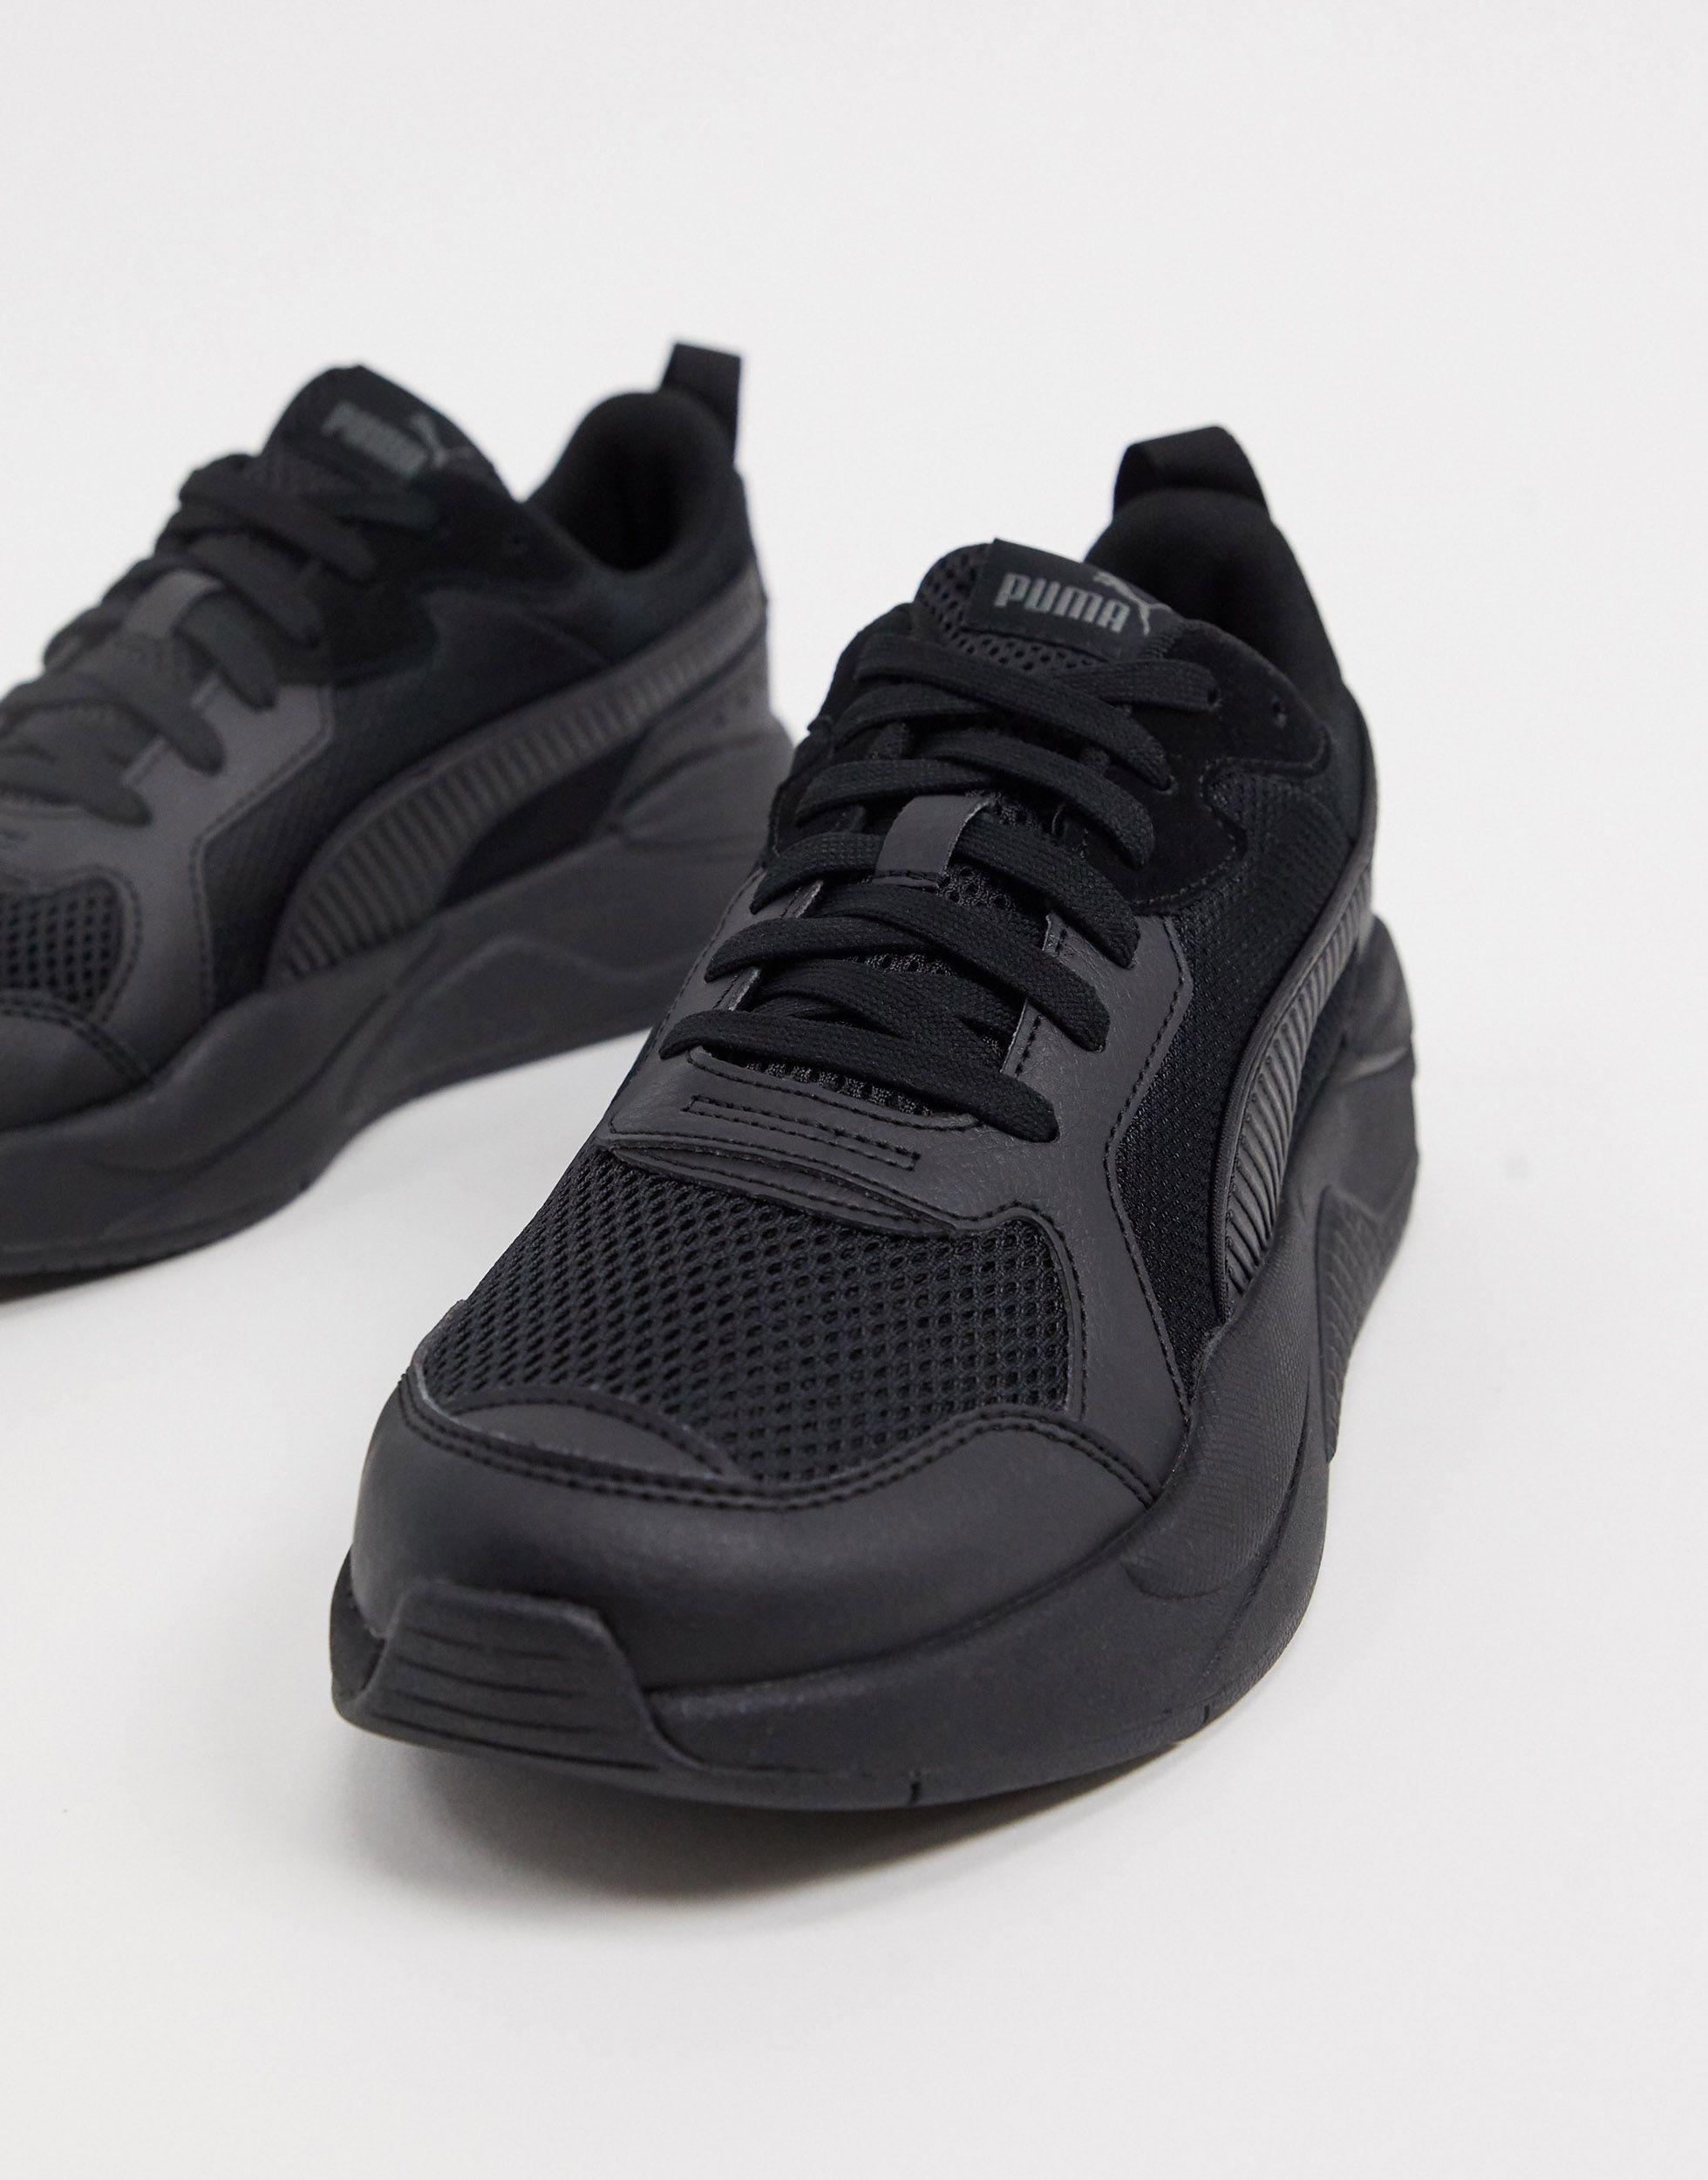 PUMA Suede X-ray Men's Sneakers in Black | Lyst